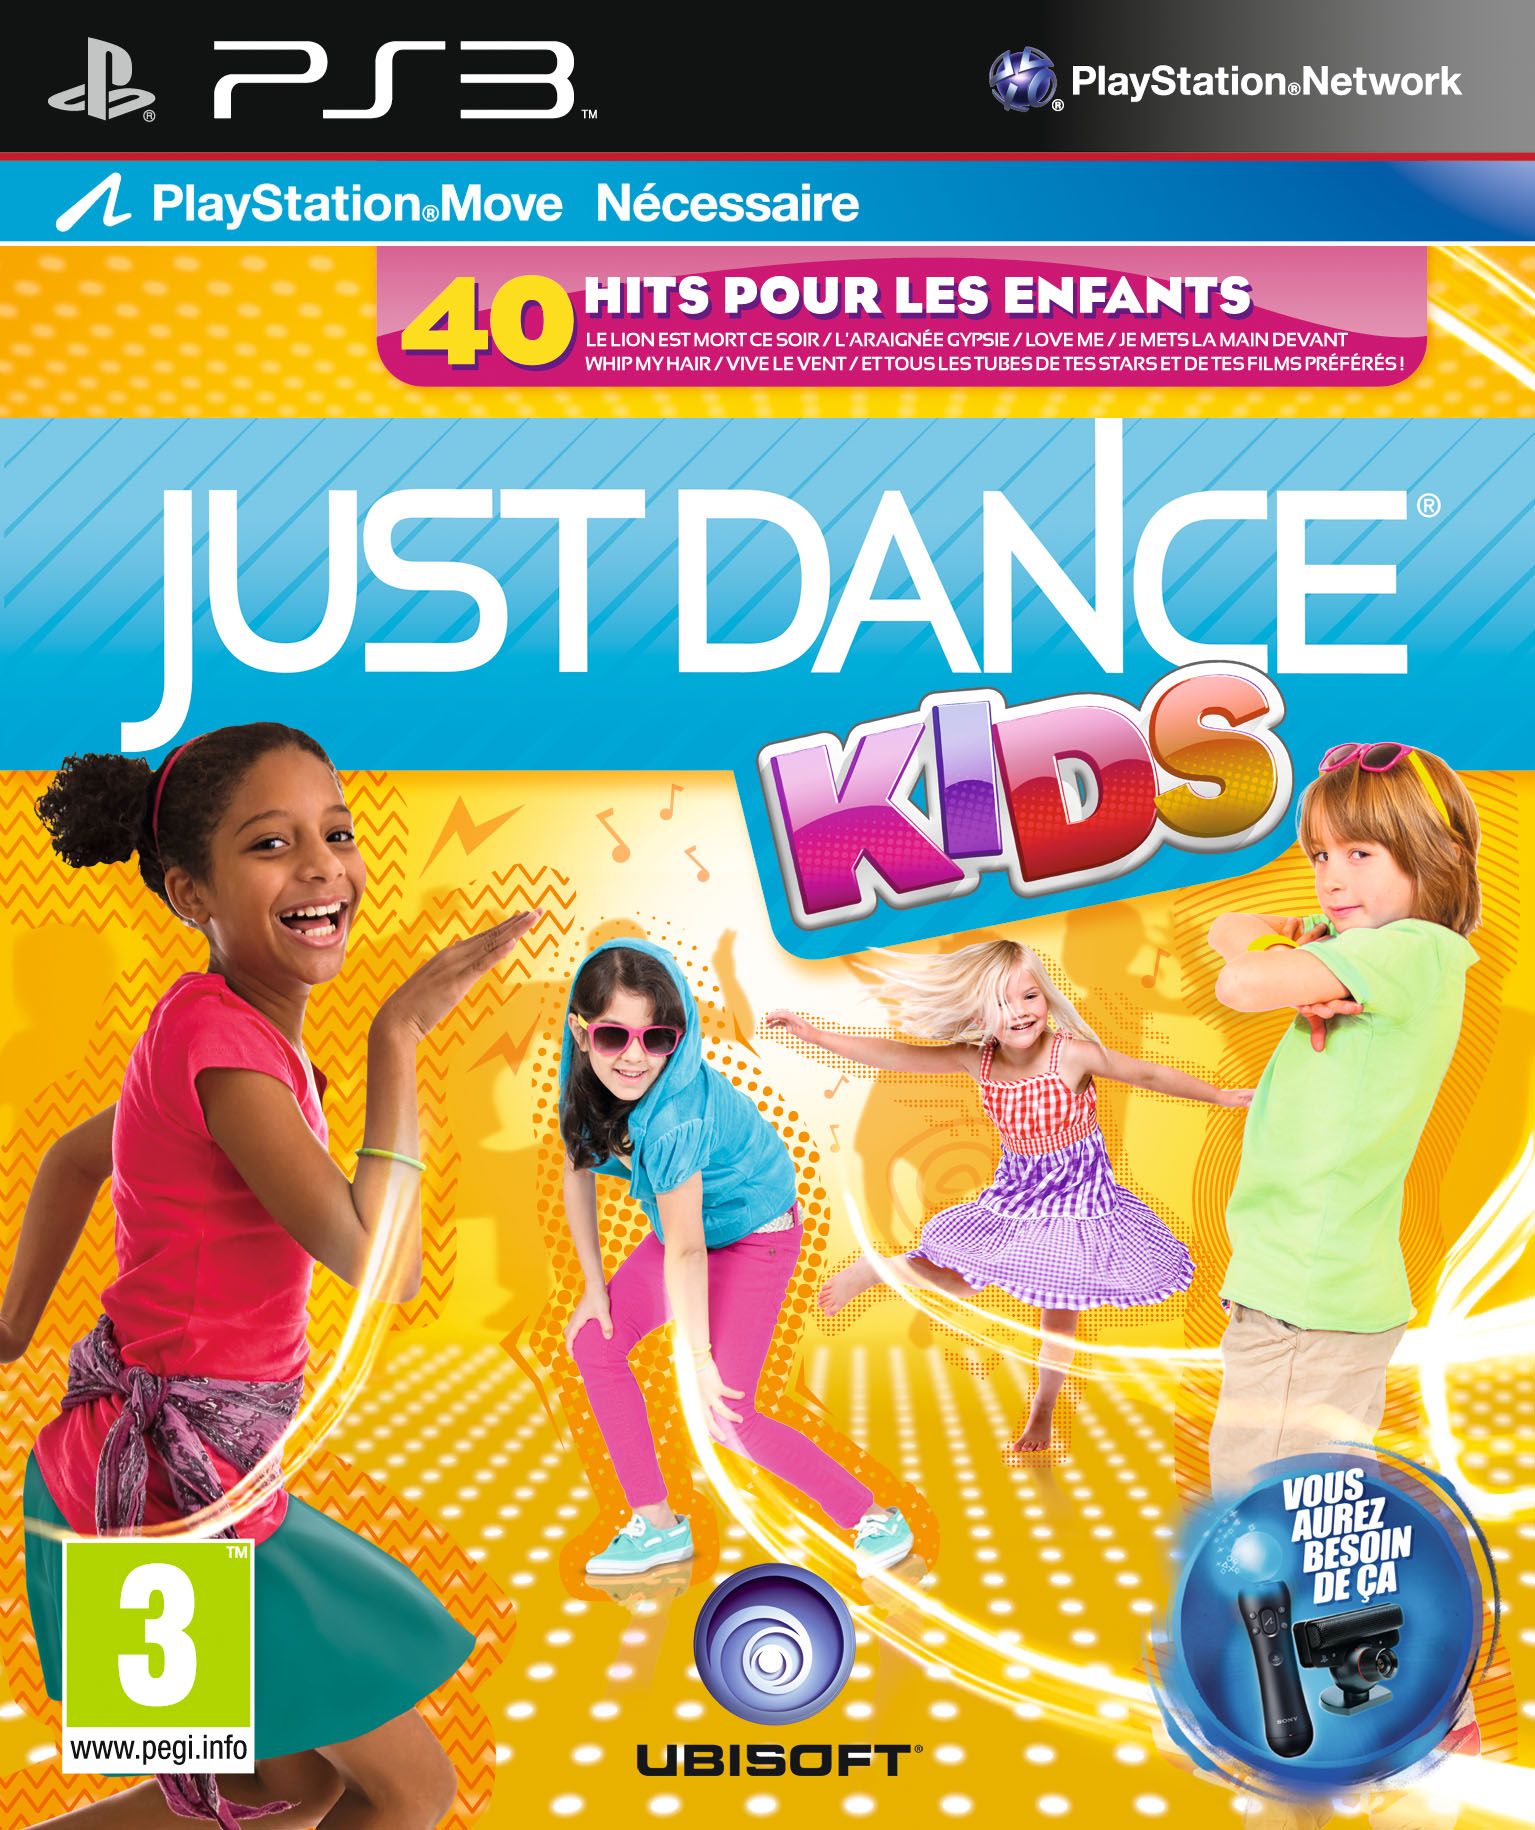 Just Dance Kids - Move